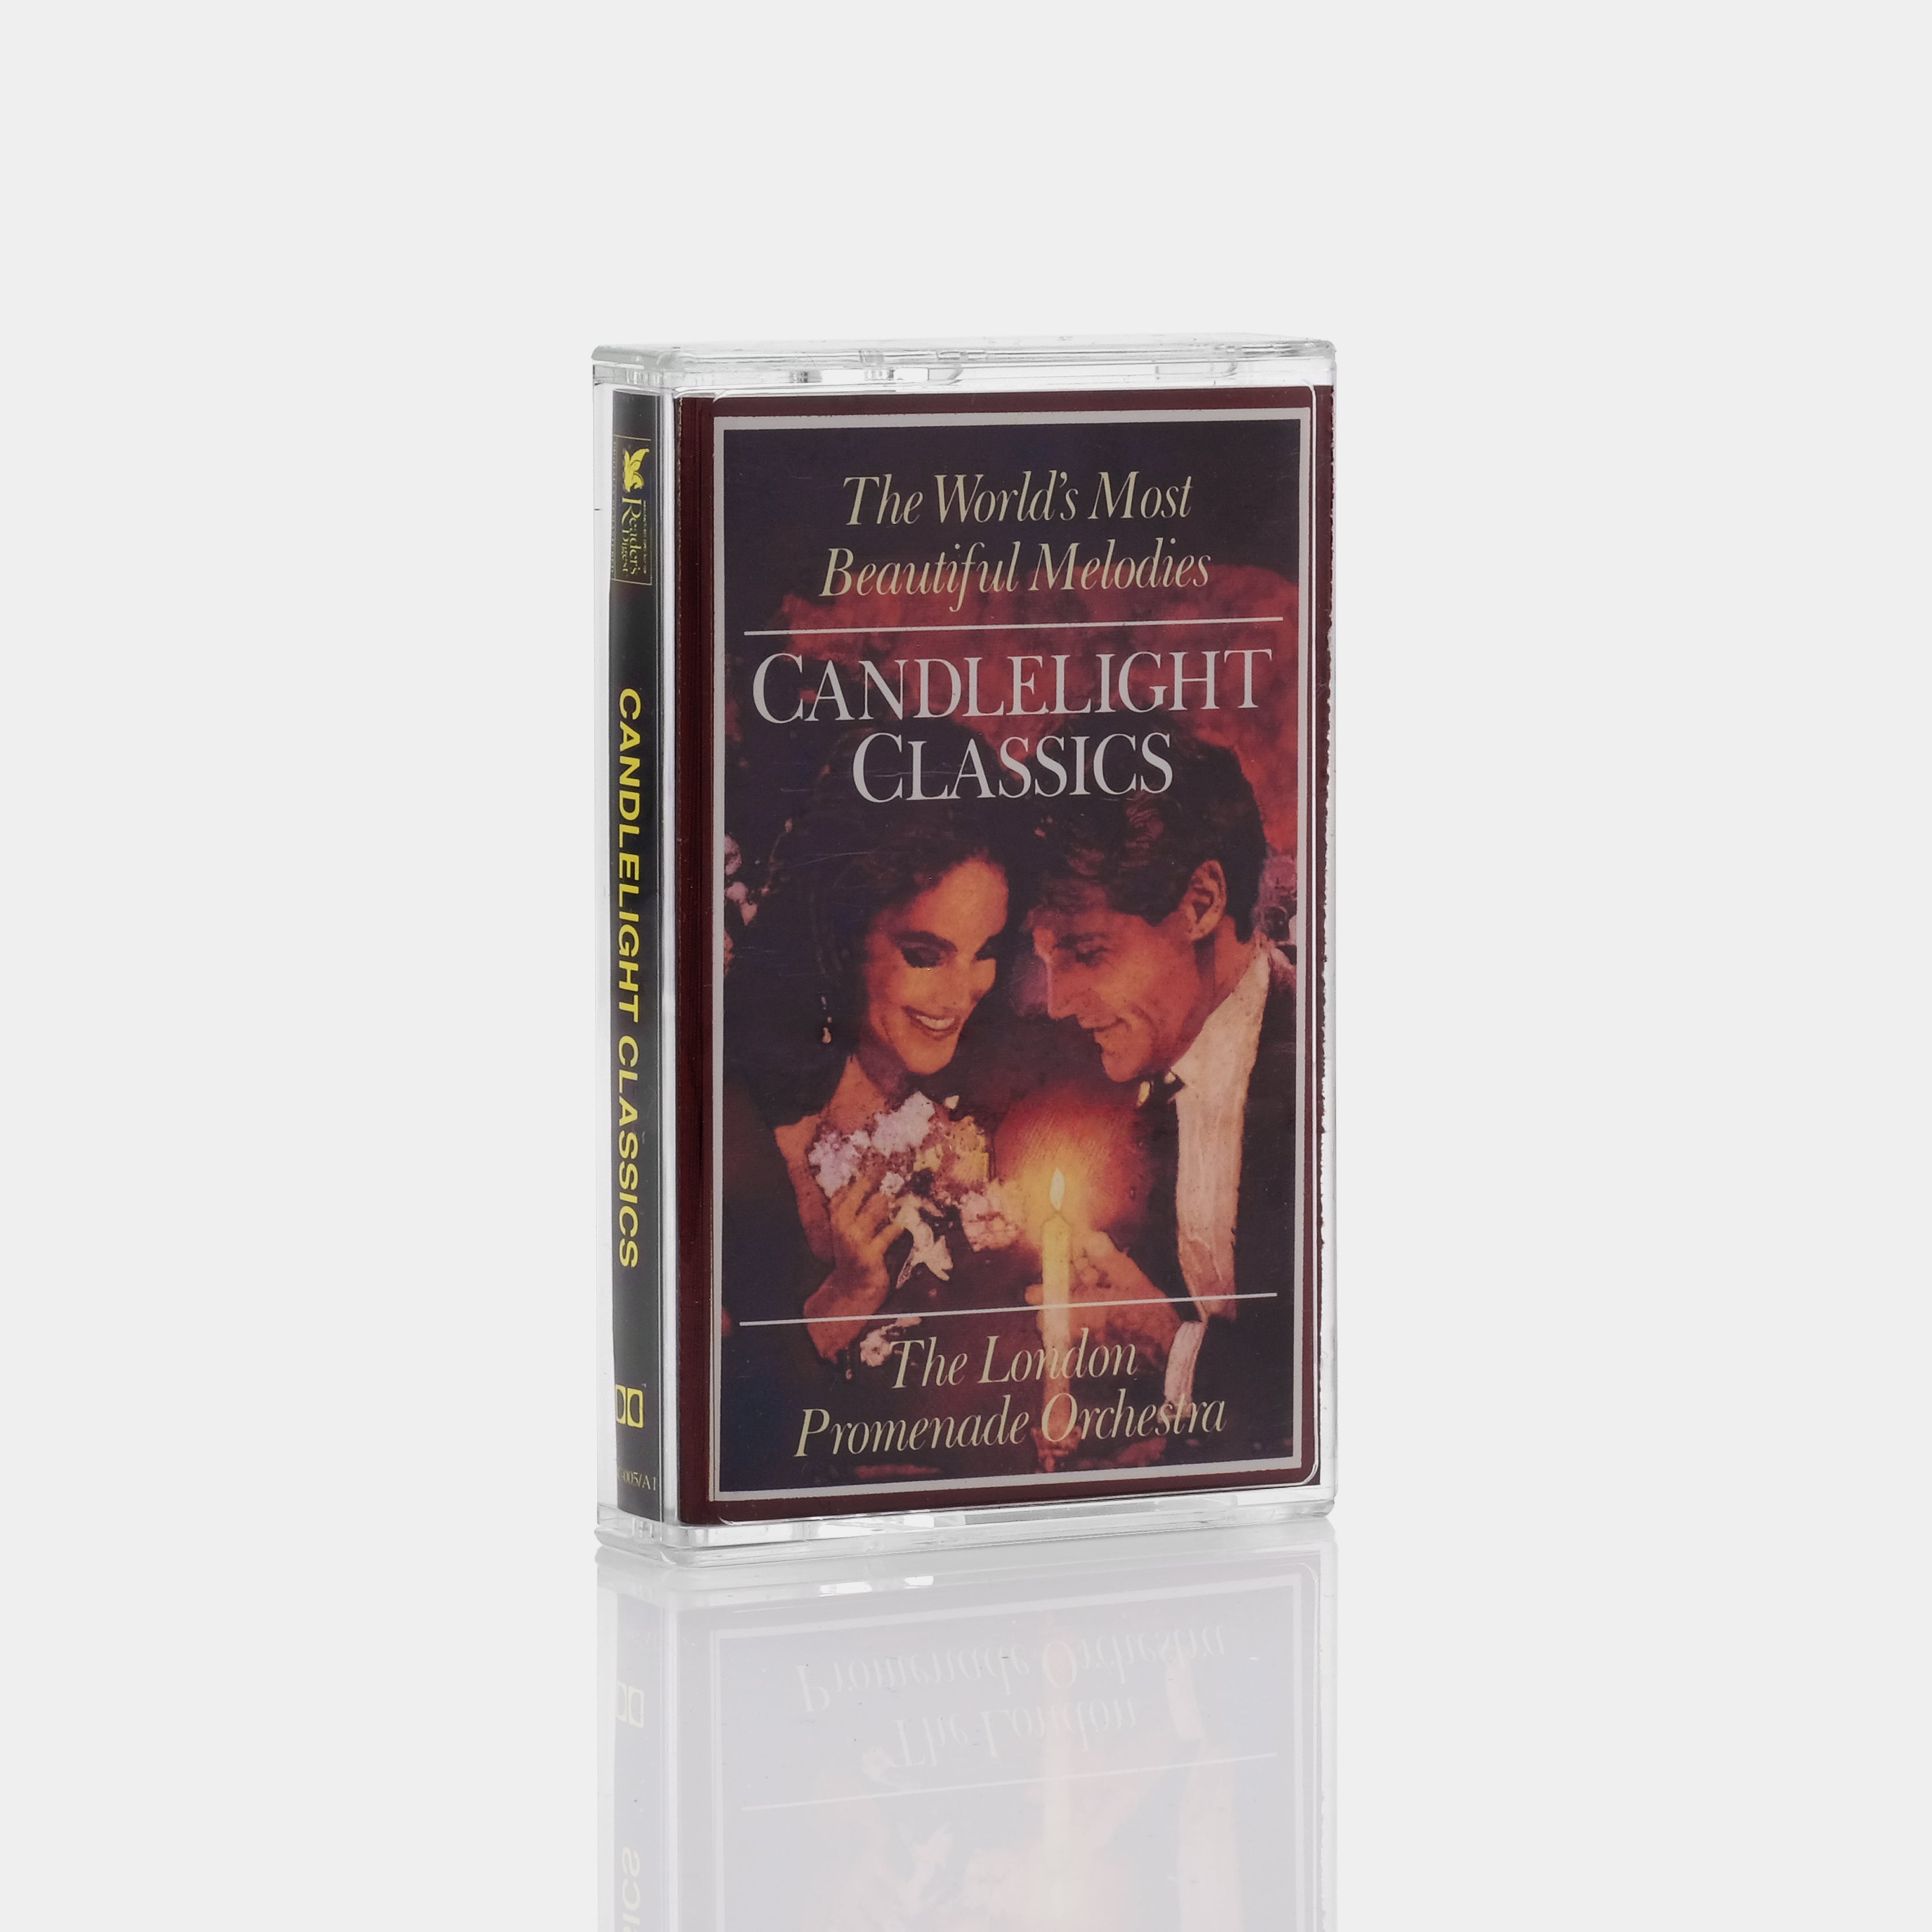 The London Promenade Orchestra - Candlelight Classics Cassette Tape